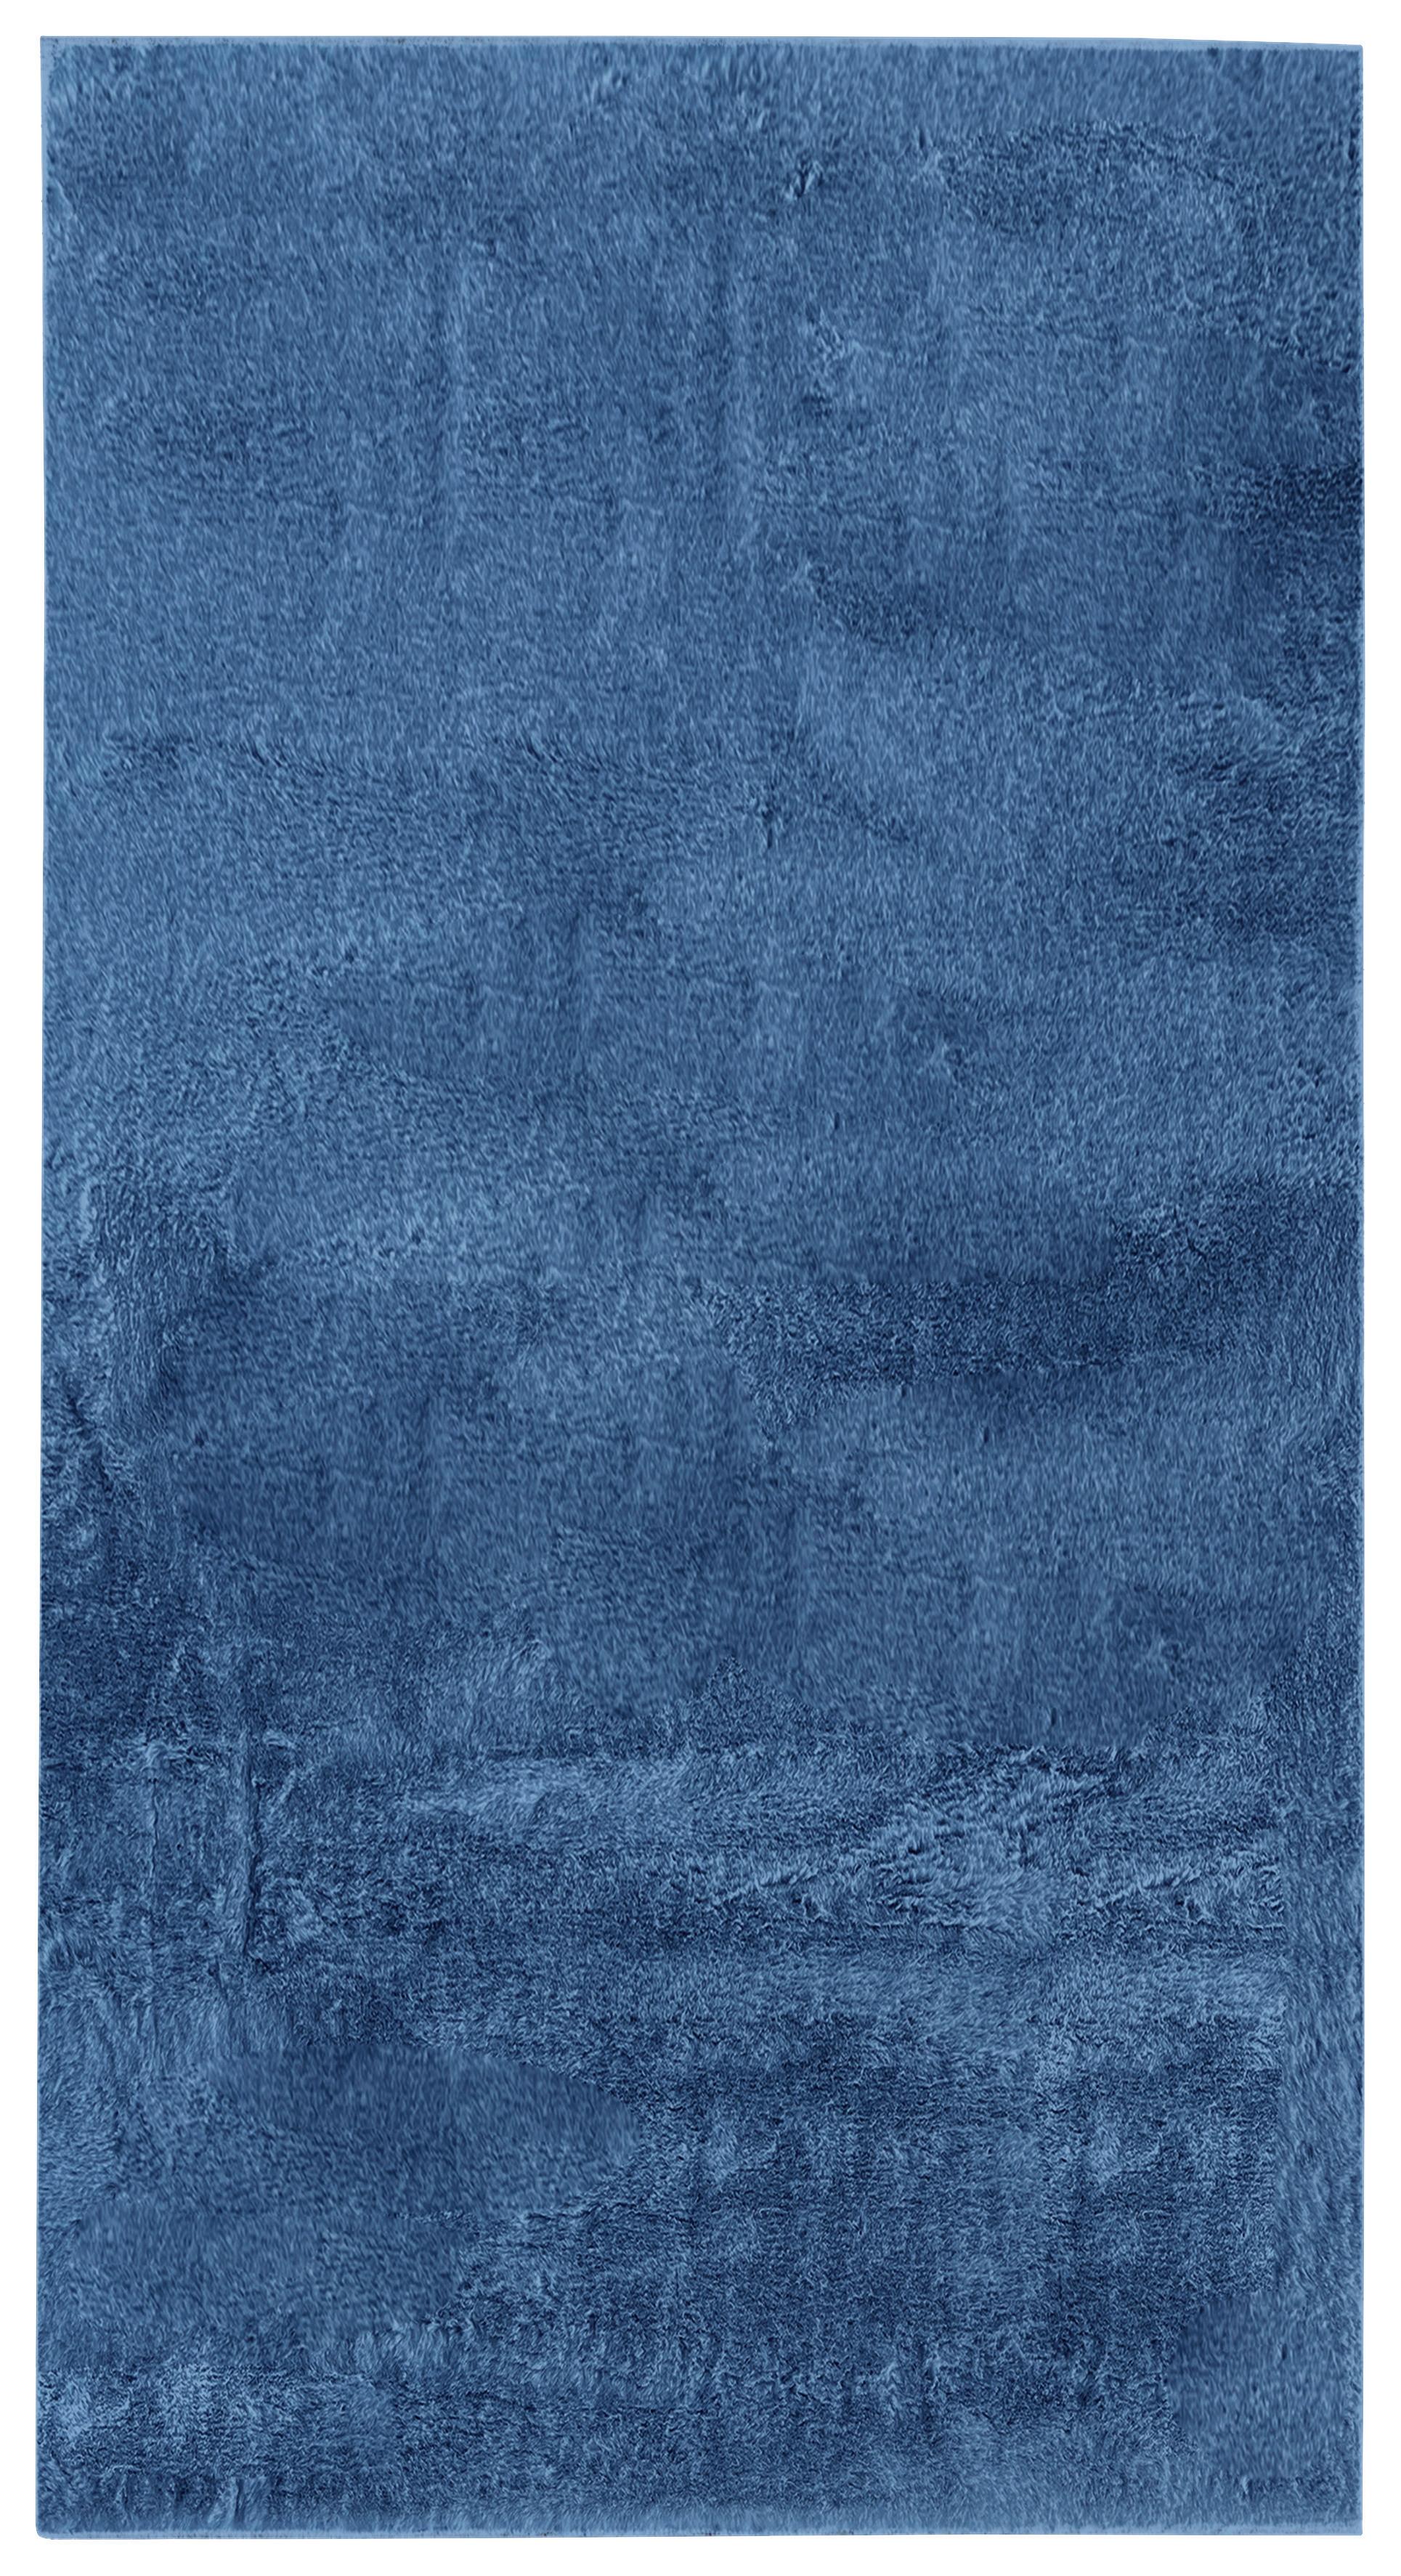 Umelá Kožušina Caroline 1, 80/150cm, Modrá - tmavomodrá, Konvenčný, textil (80/150cm) - Modern Living